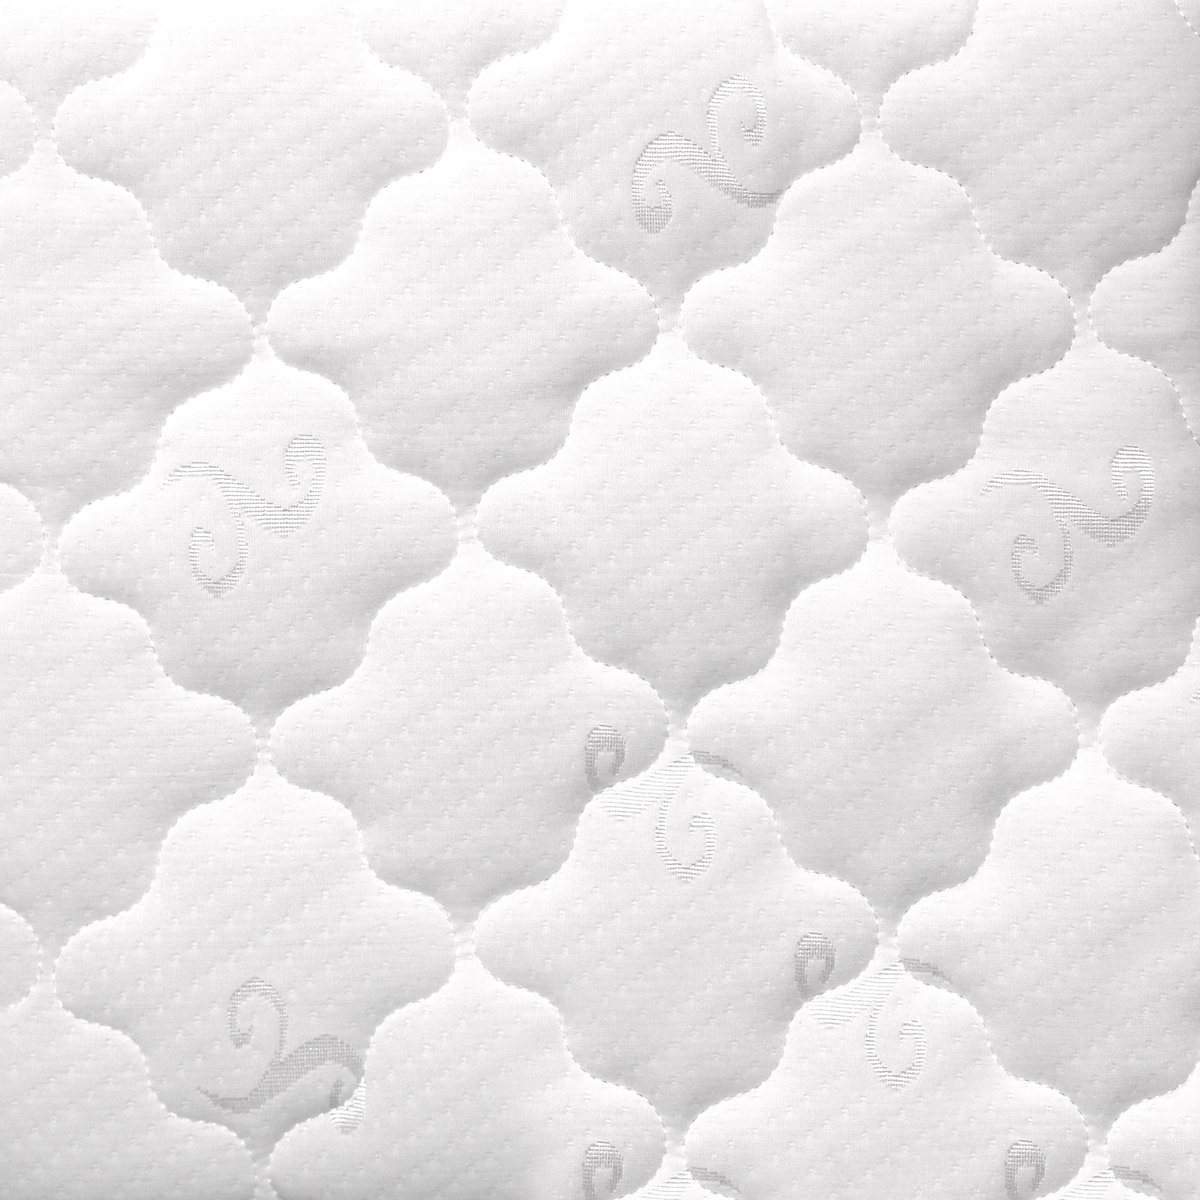 Cotton Home Fancy Bonel Spring Mattress 120x200+27cm-Pillow Top